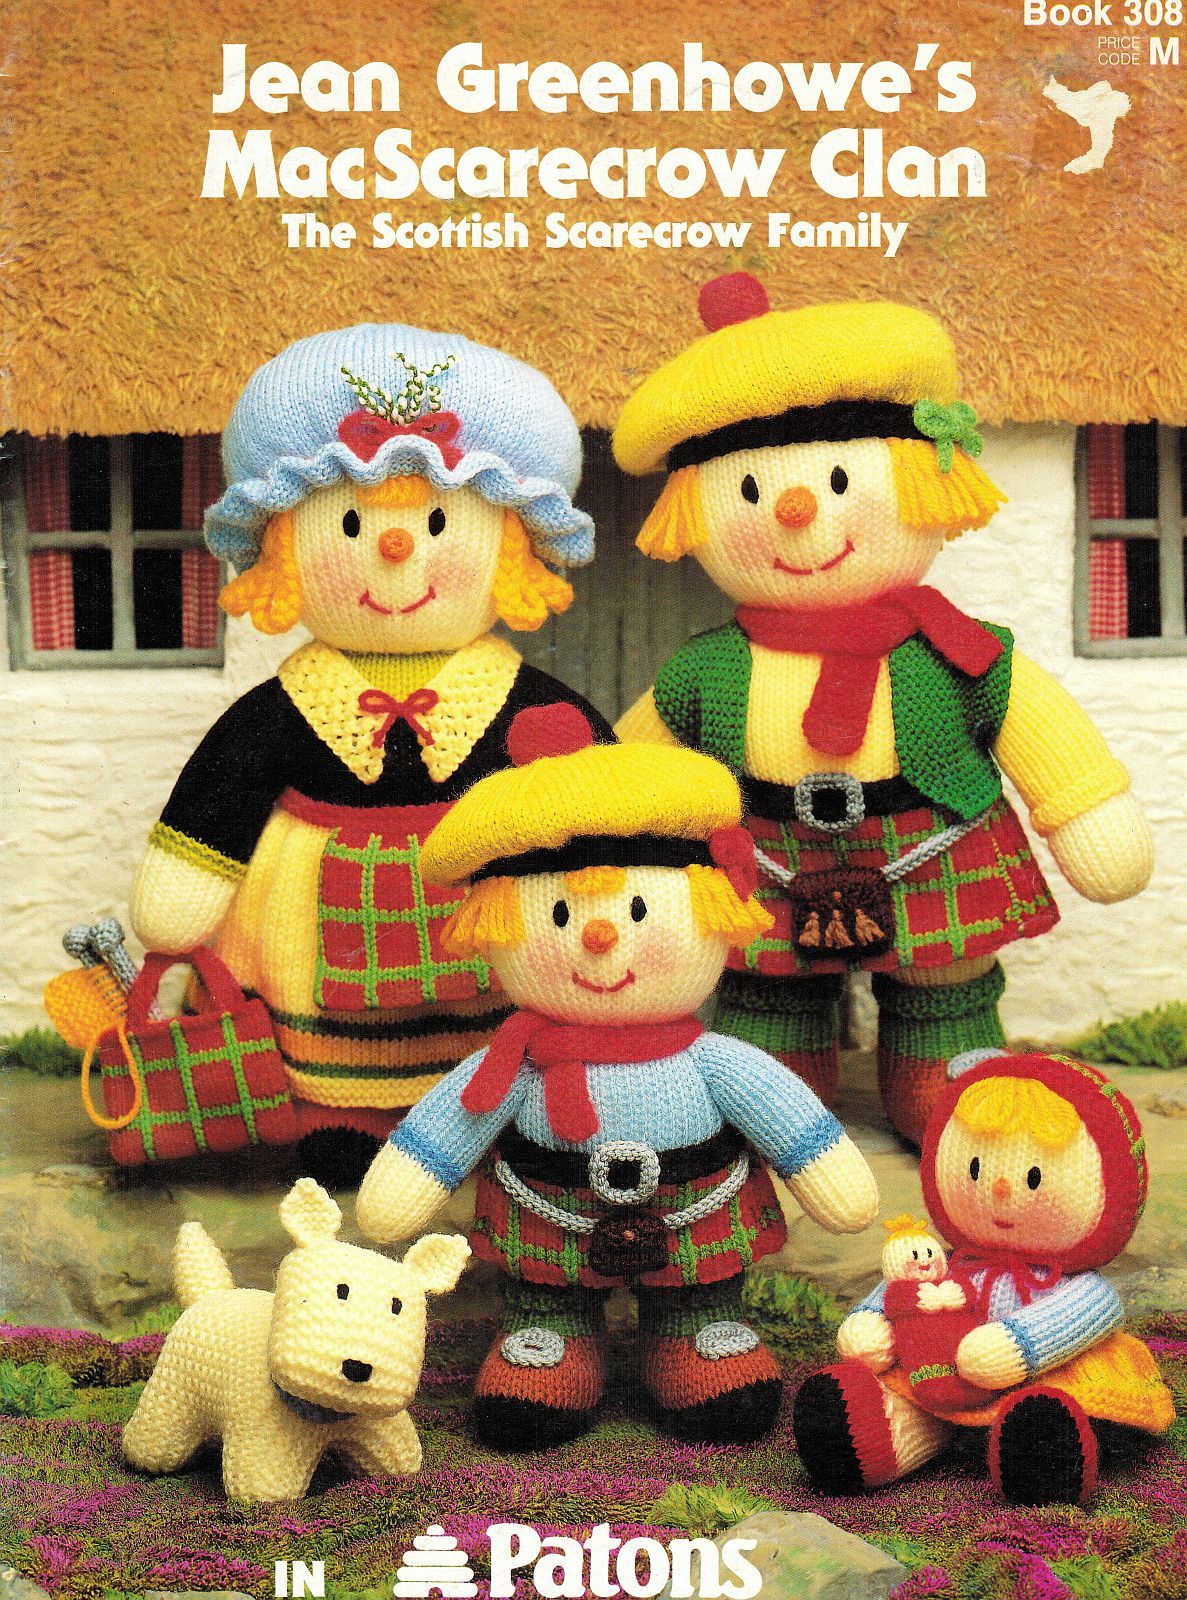 Jean Greenhowe MacScarecrow Clan Scottish Scarecrow Family Bagpipe Knit Patterns - $15.99